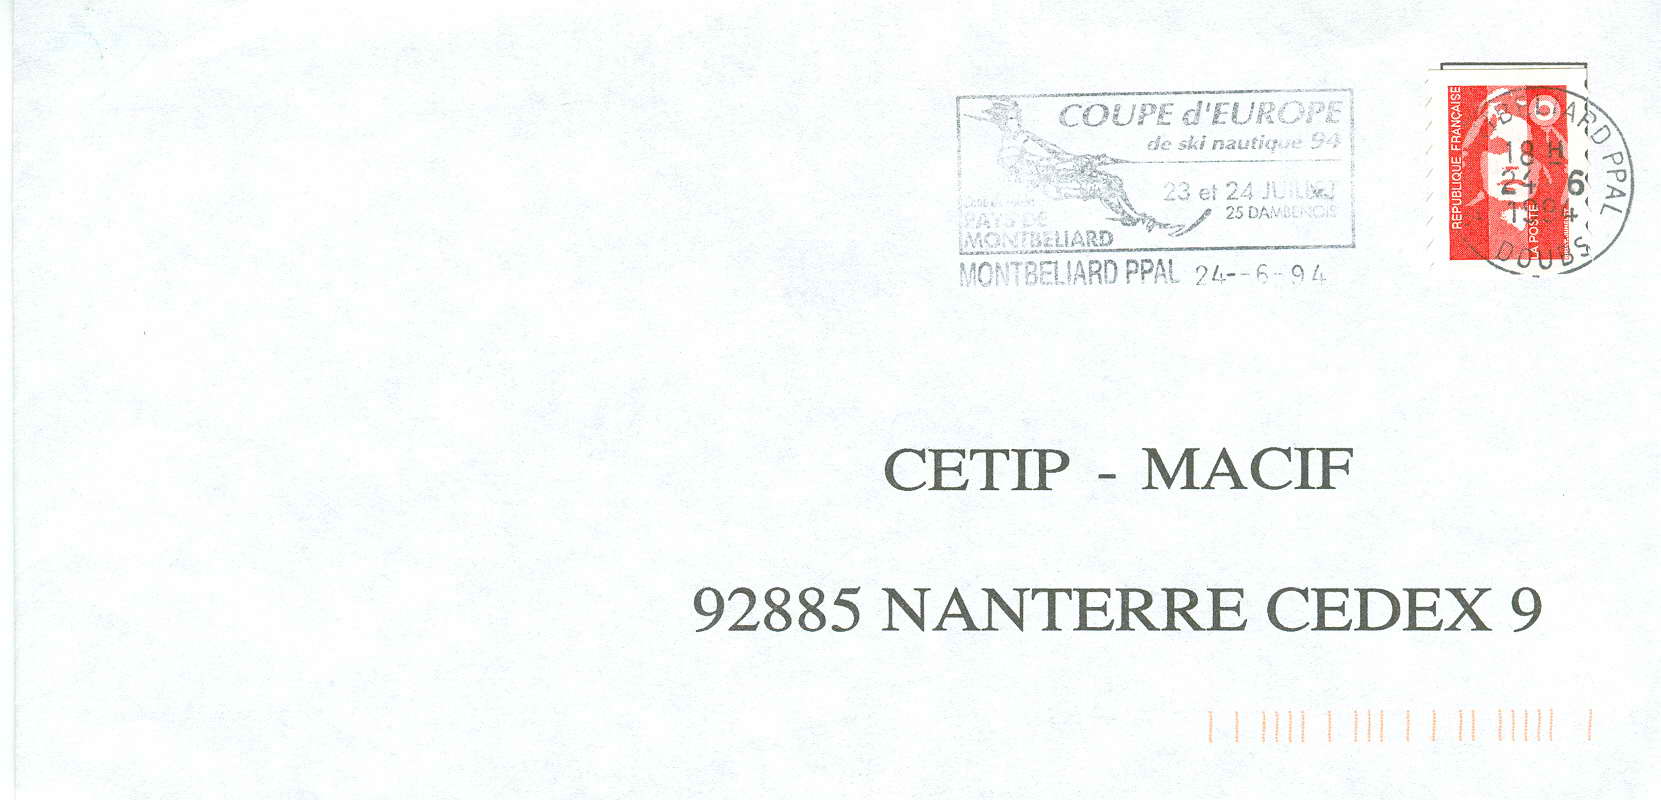 SKI NAUTIQUE FRANCE OBLITERATION TEMPORAIRE 1994 MONTBELIARD COUPE D EUROPE DE SKI NAUTIQUE - Sci Nautico